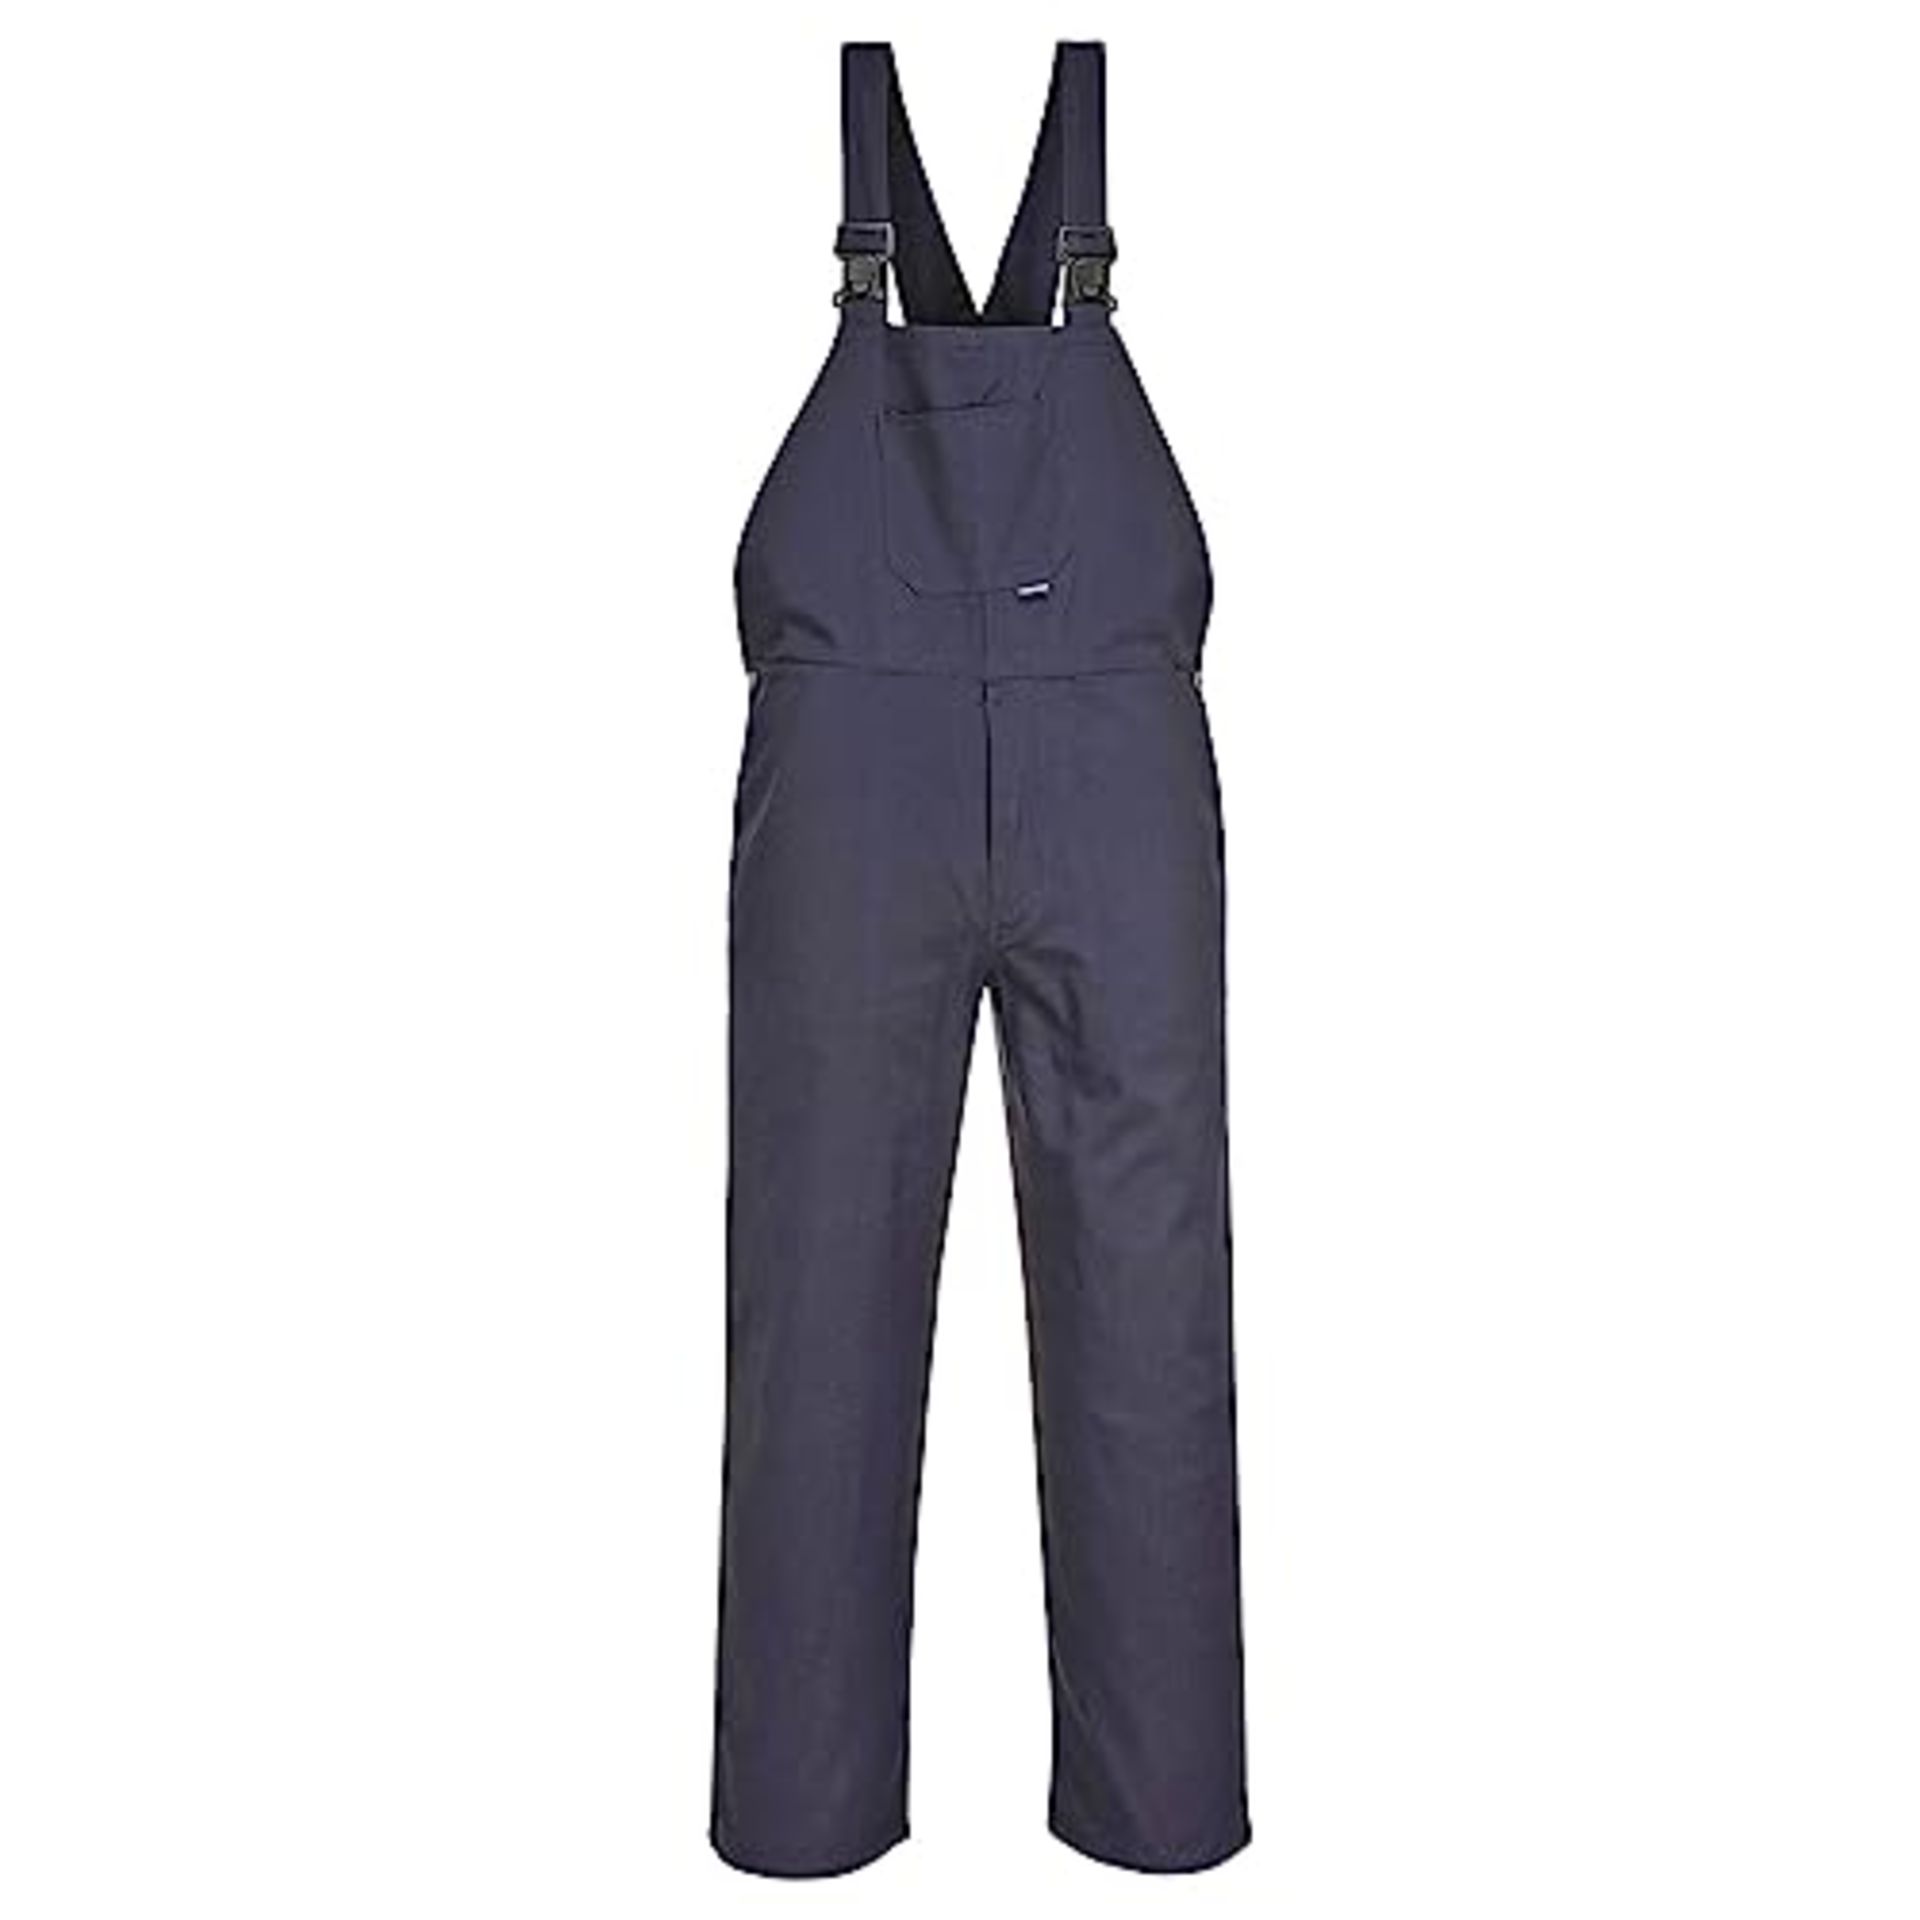 Portwest C881 Men's Workwear Adjustable Cotton Bib and Brace Overalls Navy, S